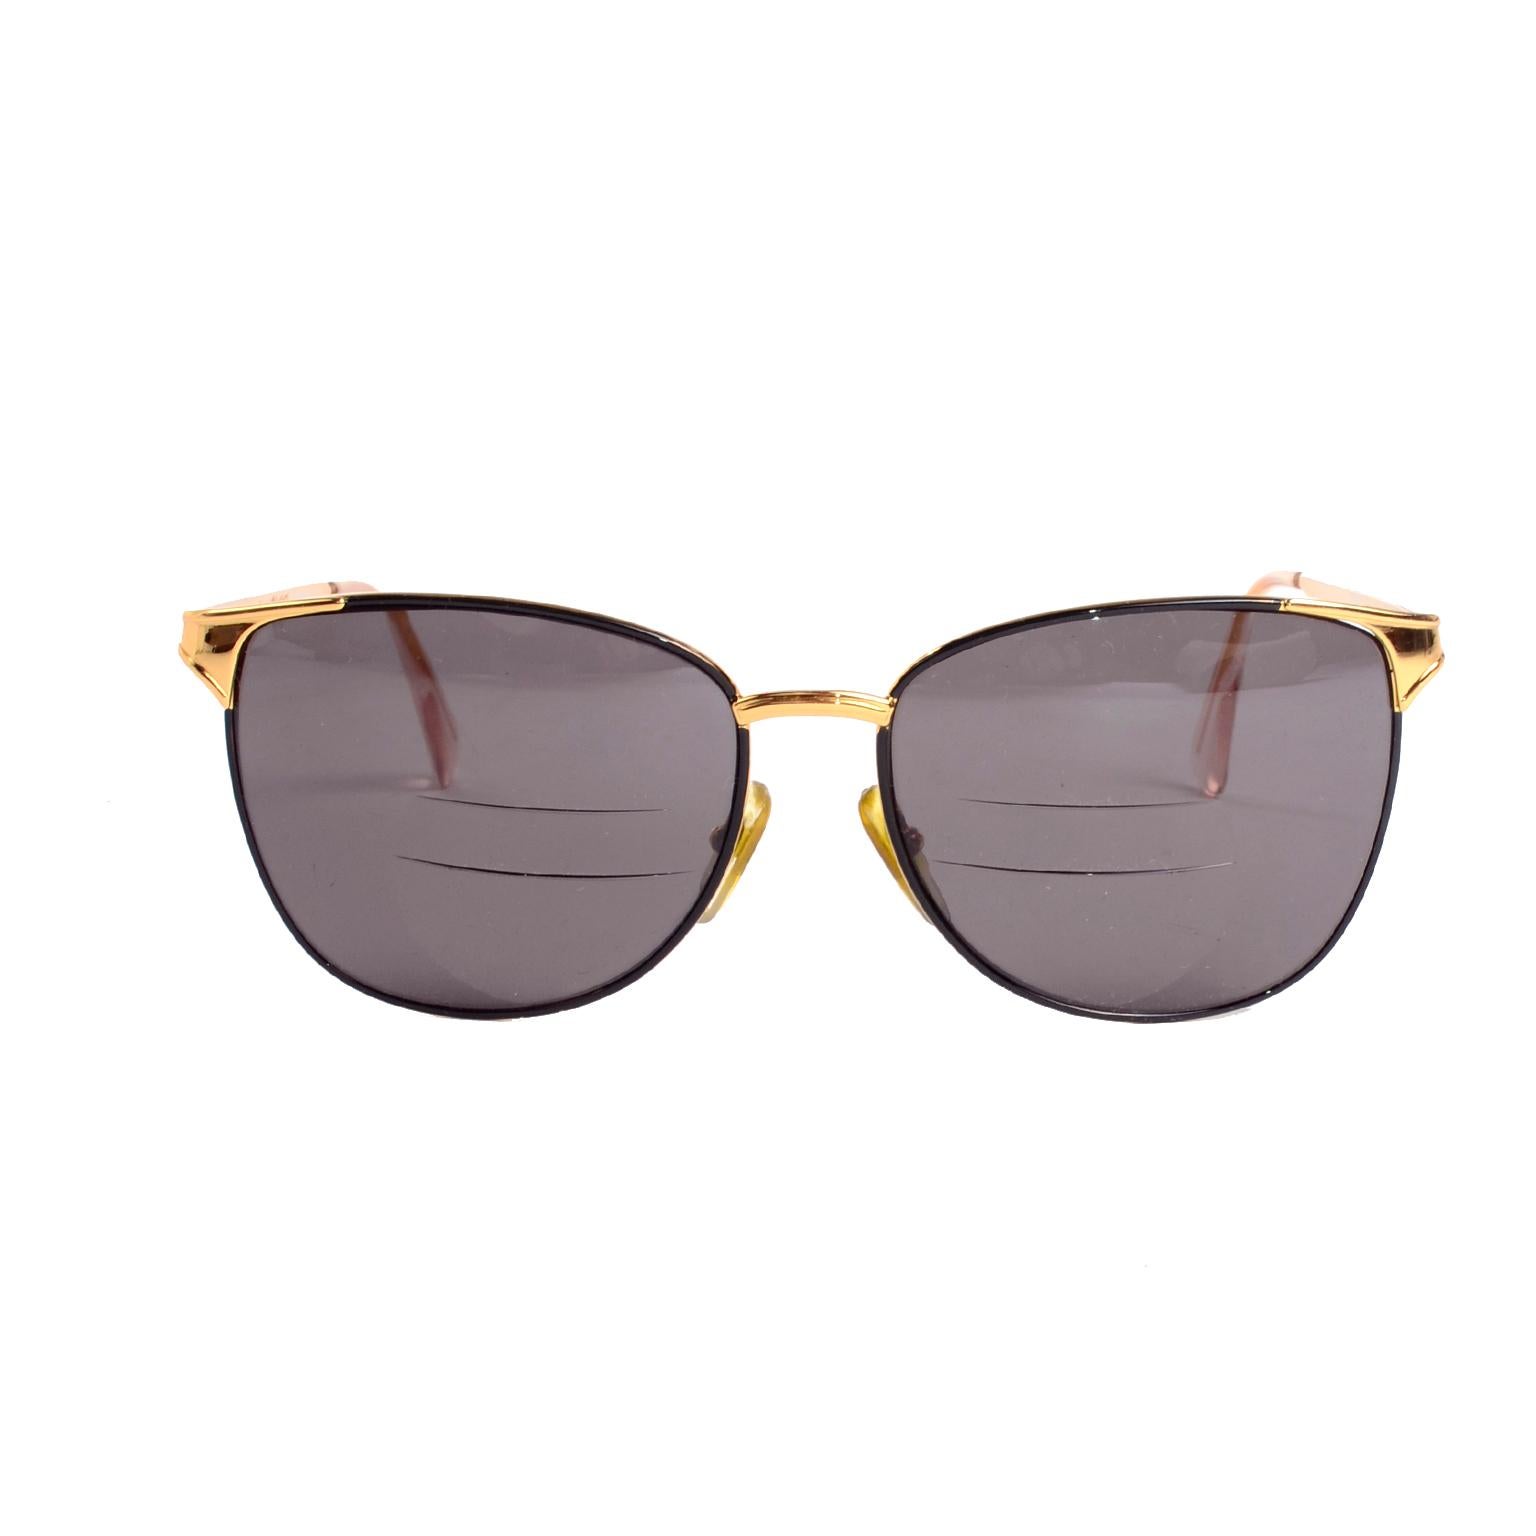 Gray Laura Biagiotti Gold Rim Vintage Sunglasses Frames For Sale